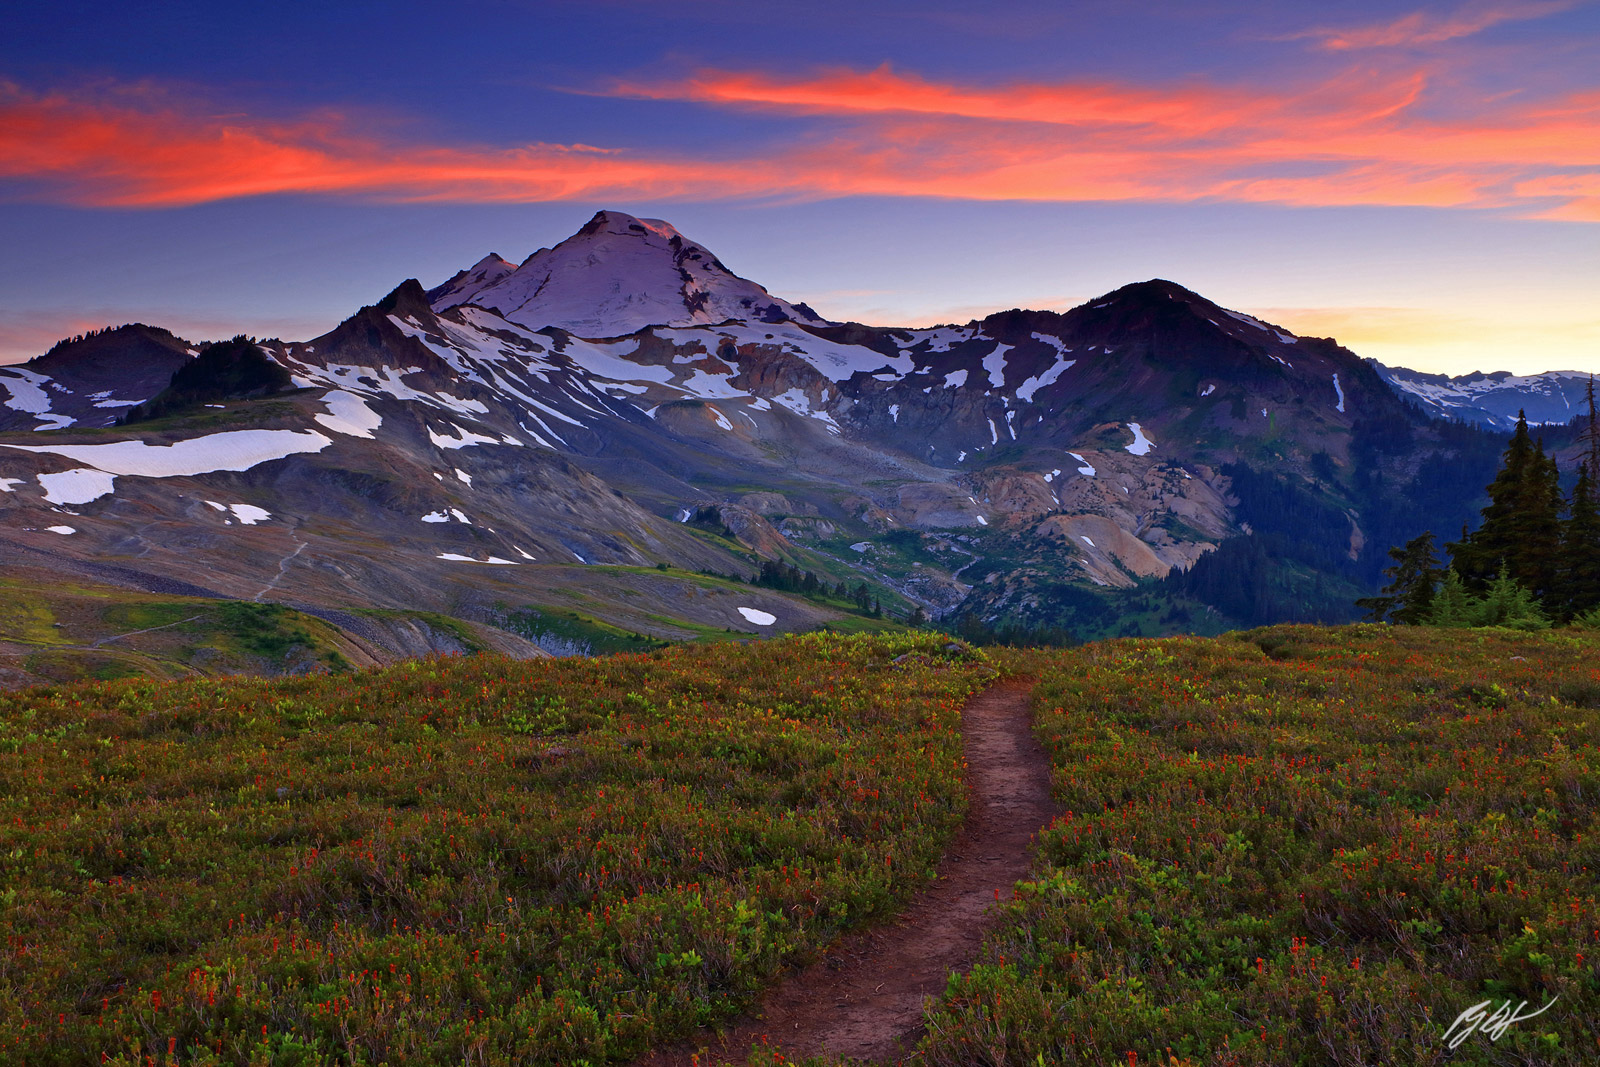 Sunset Mt Baker from Ptarmigan Ridge in the Mt Baker Wilderness, North Cascades in Washington.